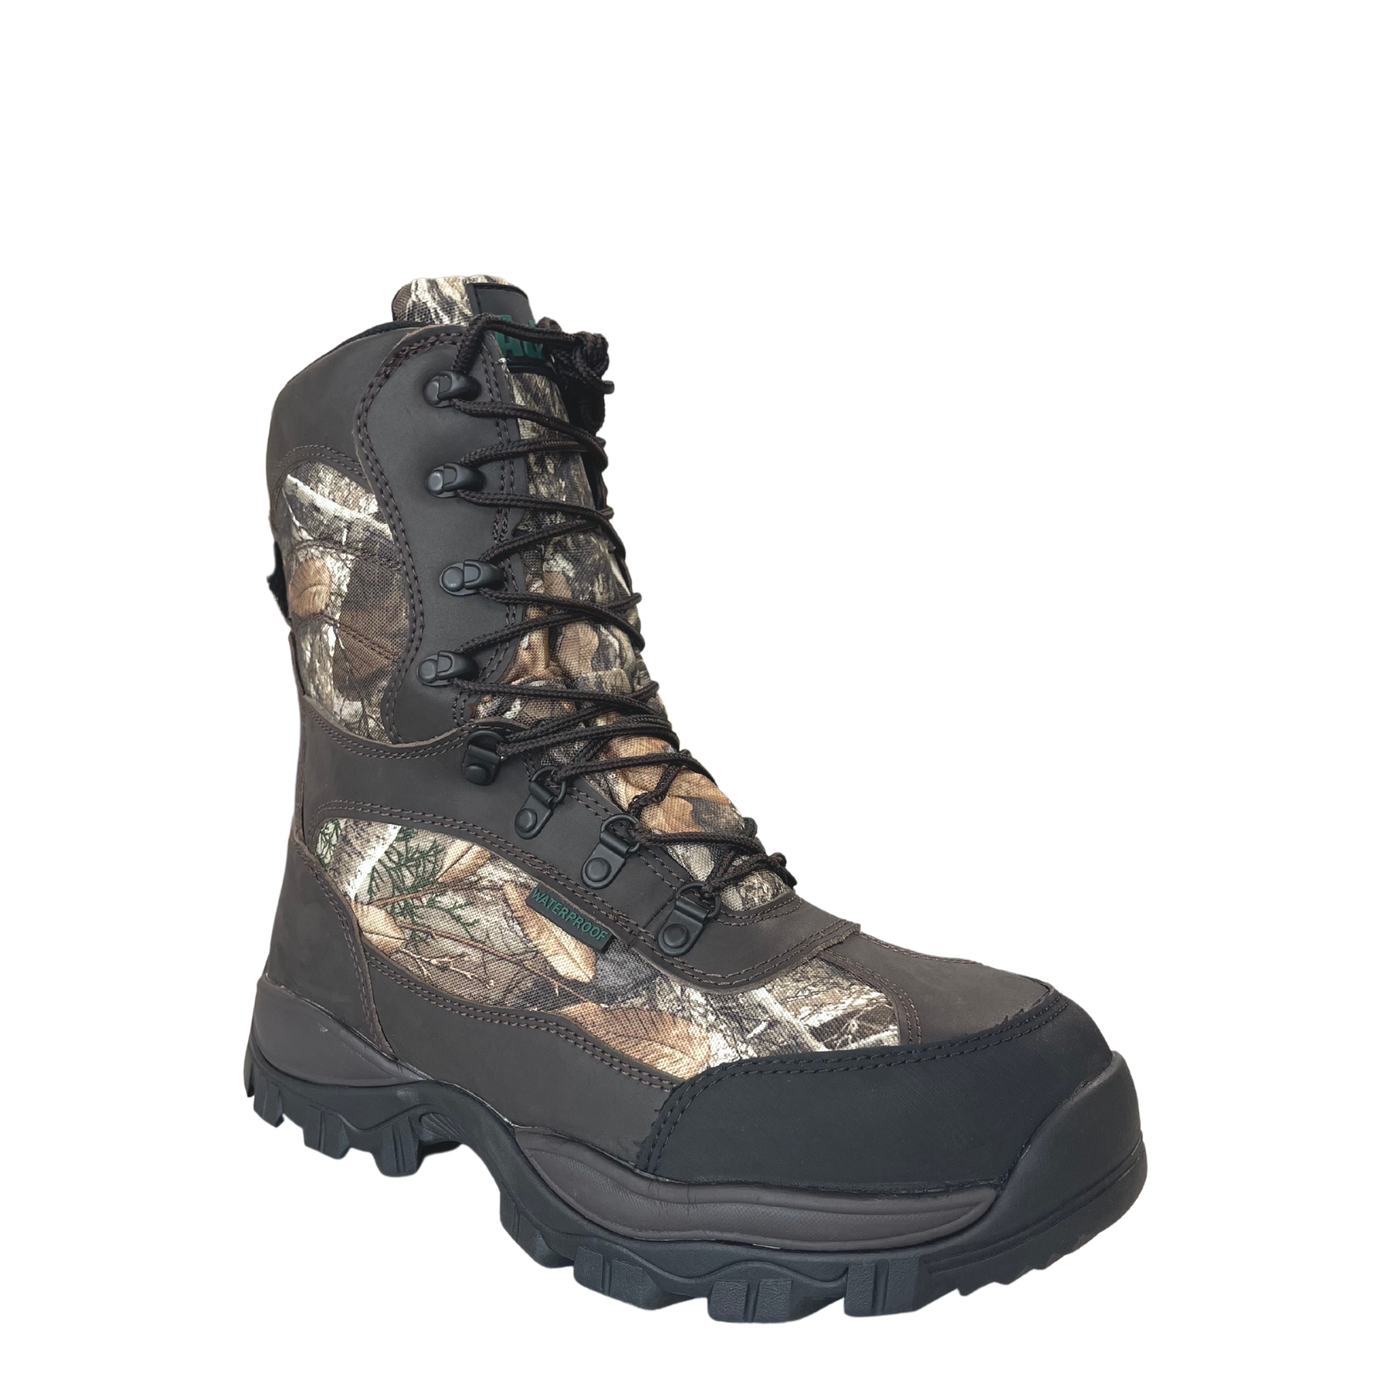 Men's 10" 800g Camo Hunting Boot - 1015 - Shop Genuine Leather men & women's boots online | AdTecFootWear